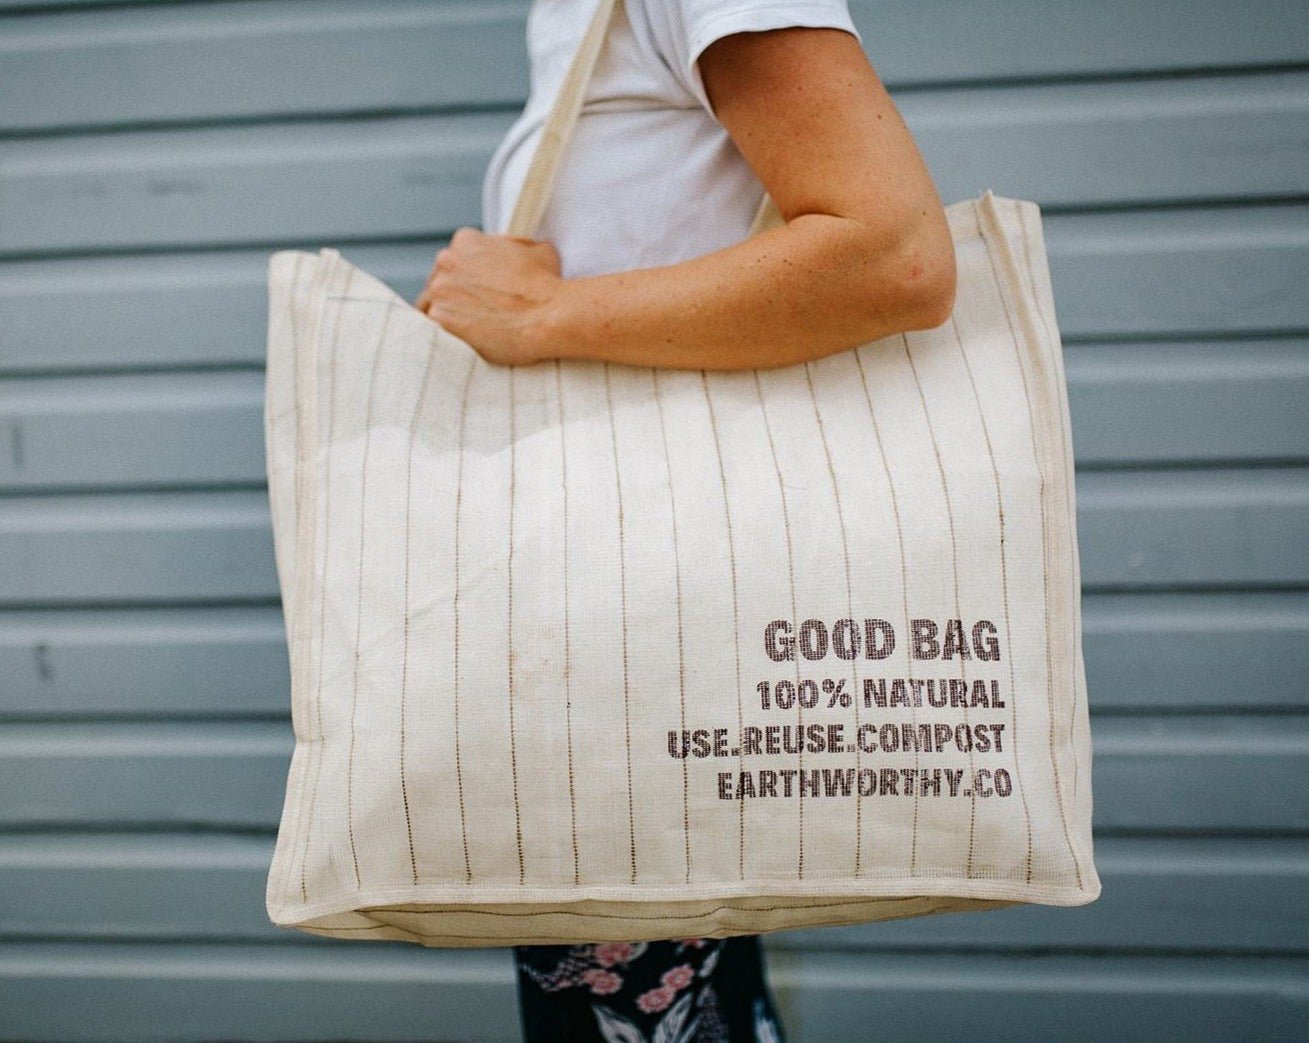 Good Bag - jumbo-Earth Worthy-stride